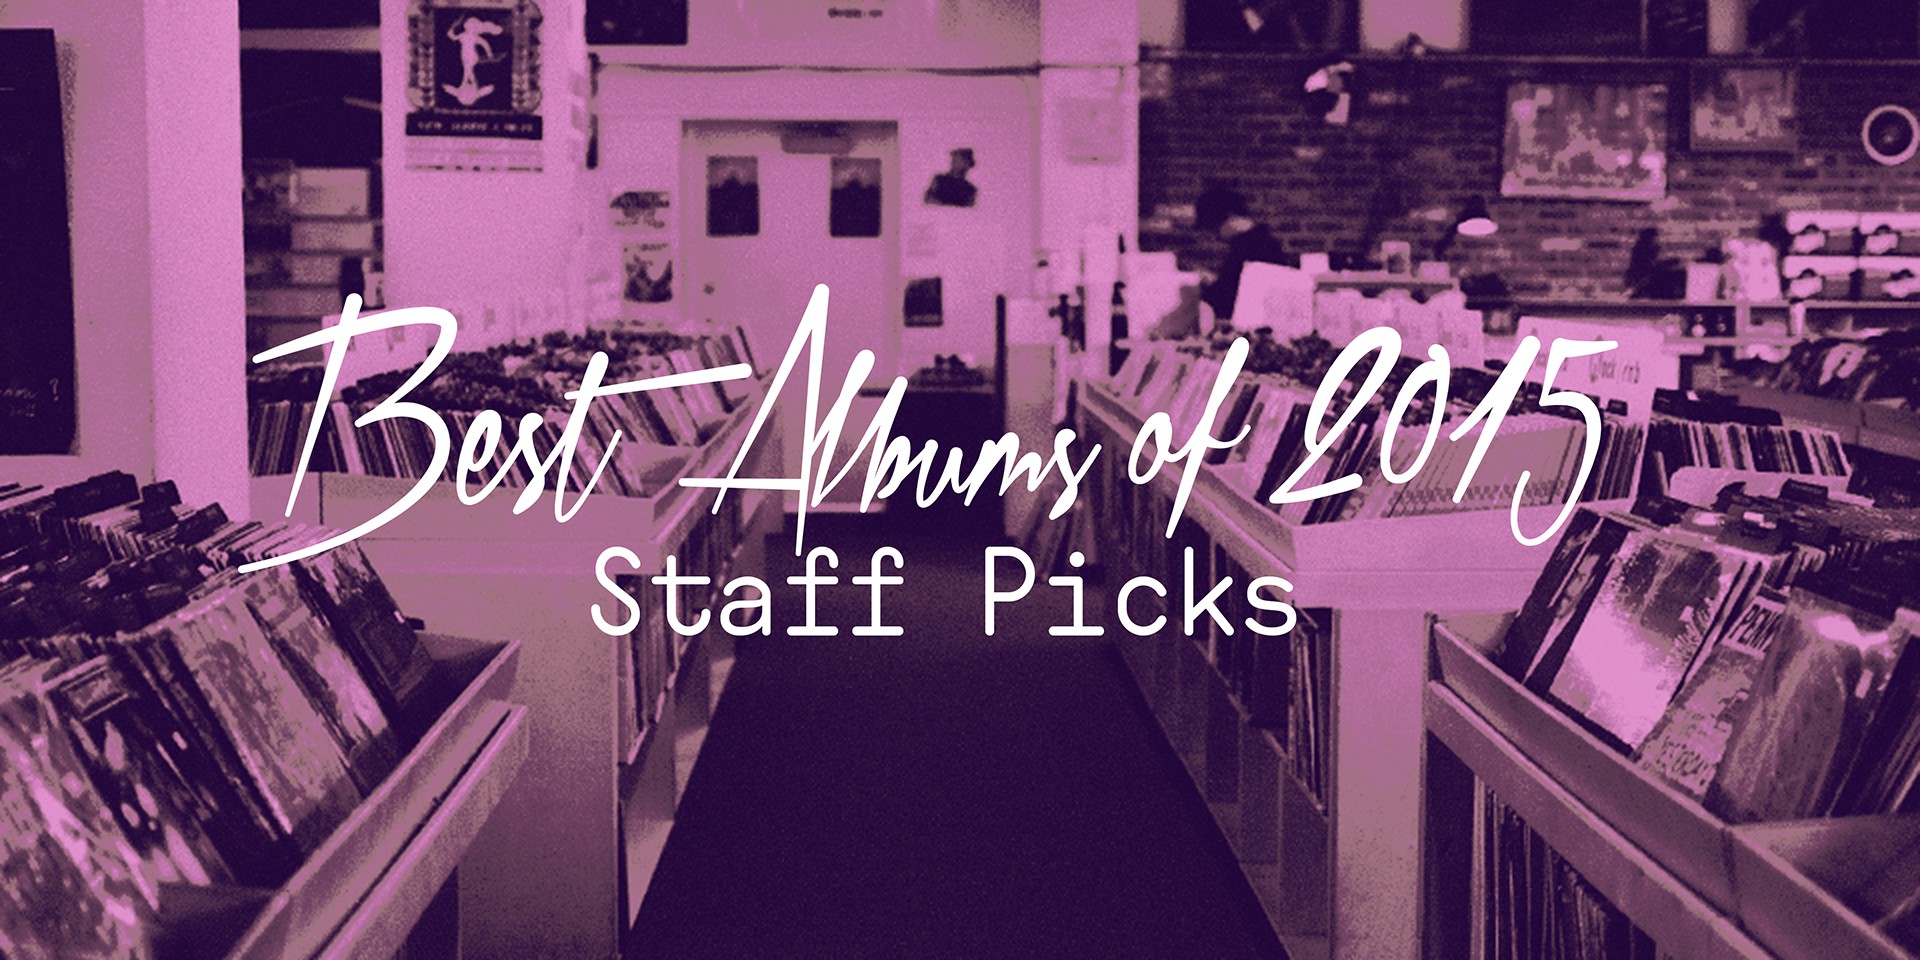 Best Albums of 2015: Staff Picks